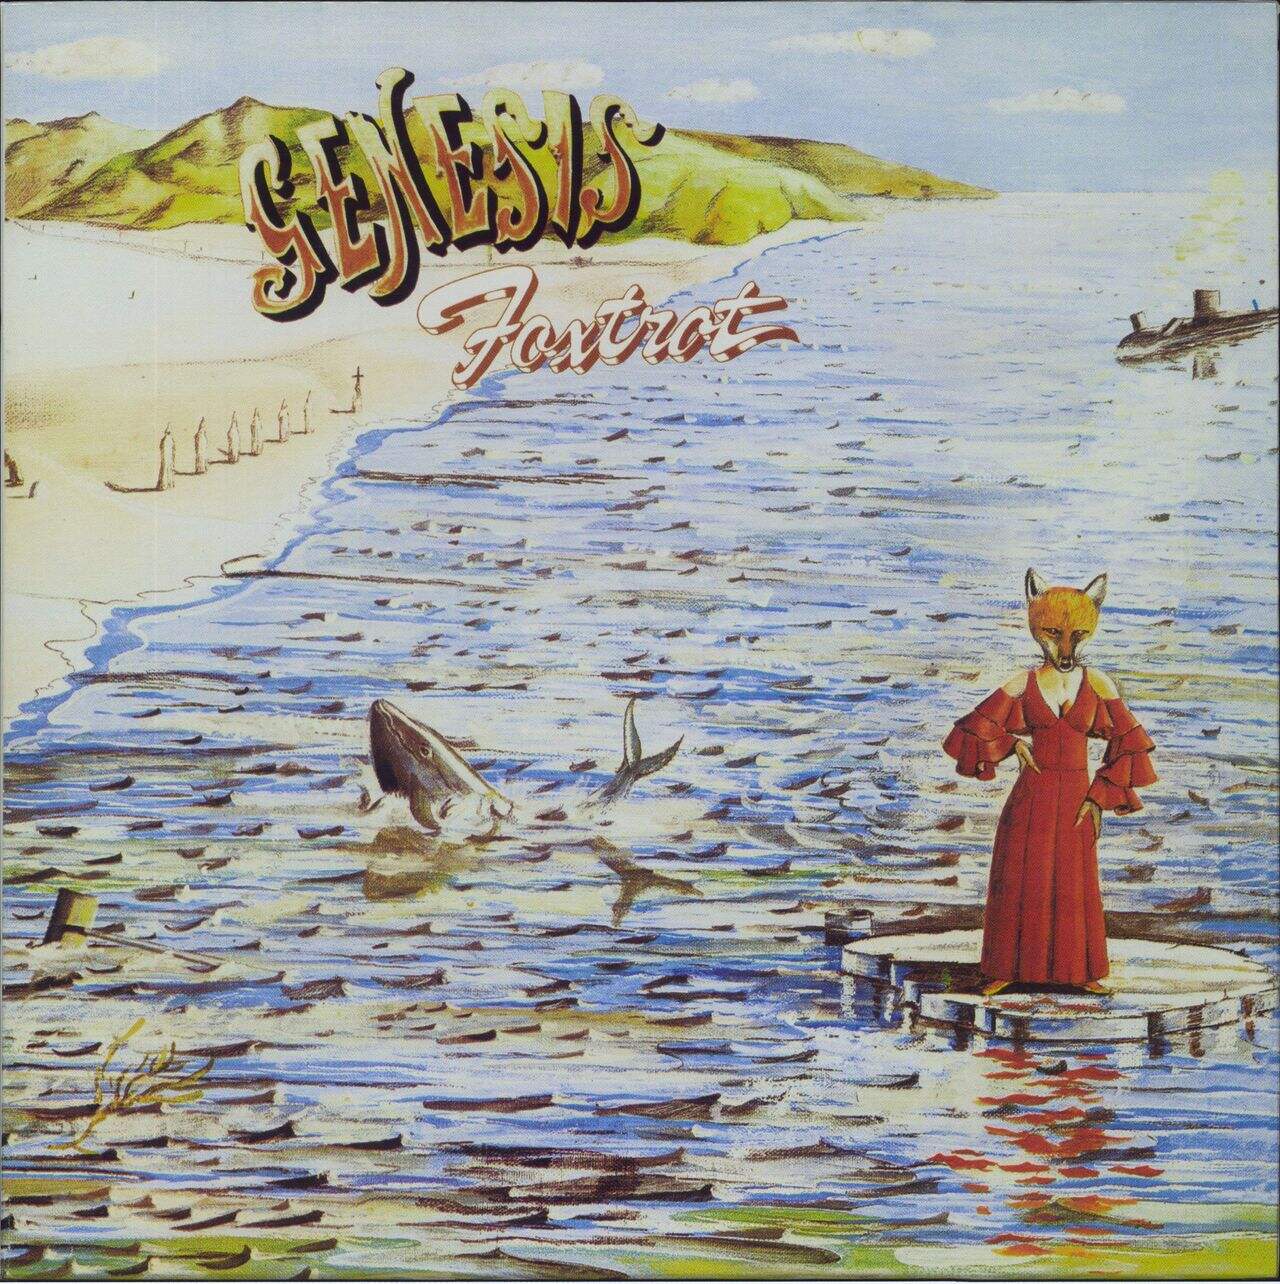 Genesis Foxtrot - 200gm US Vinyl LP